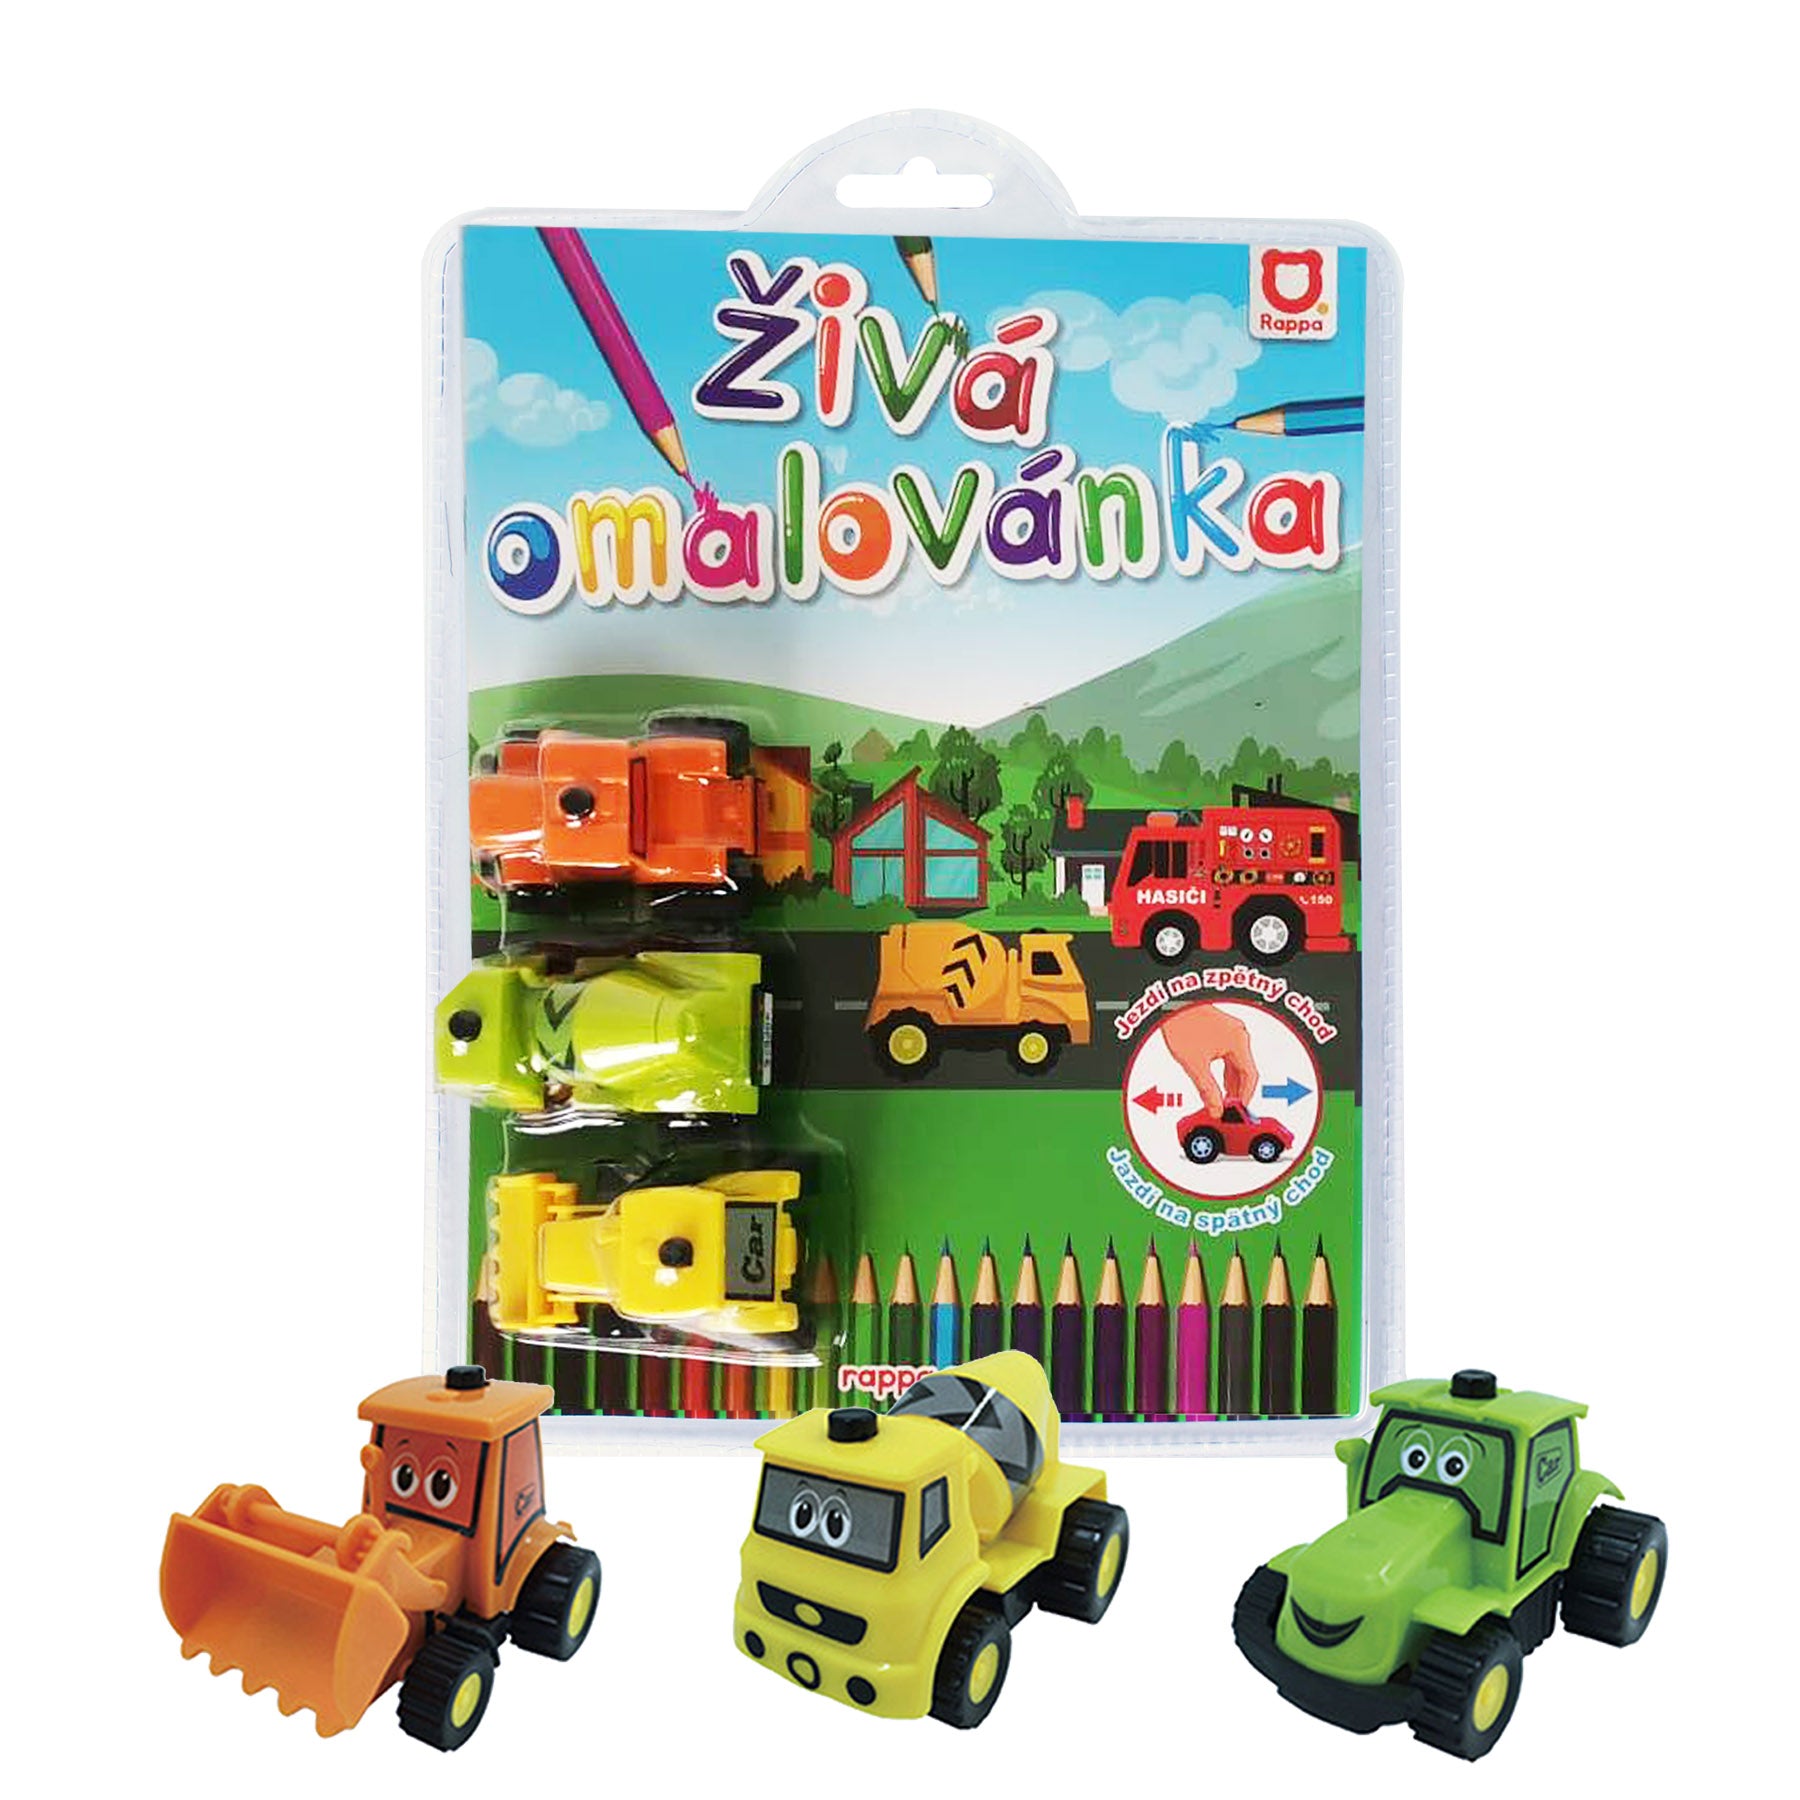 Ziva omalovanka stavba 3 ks | Czech Toys | czechmovie